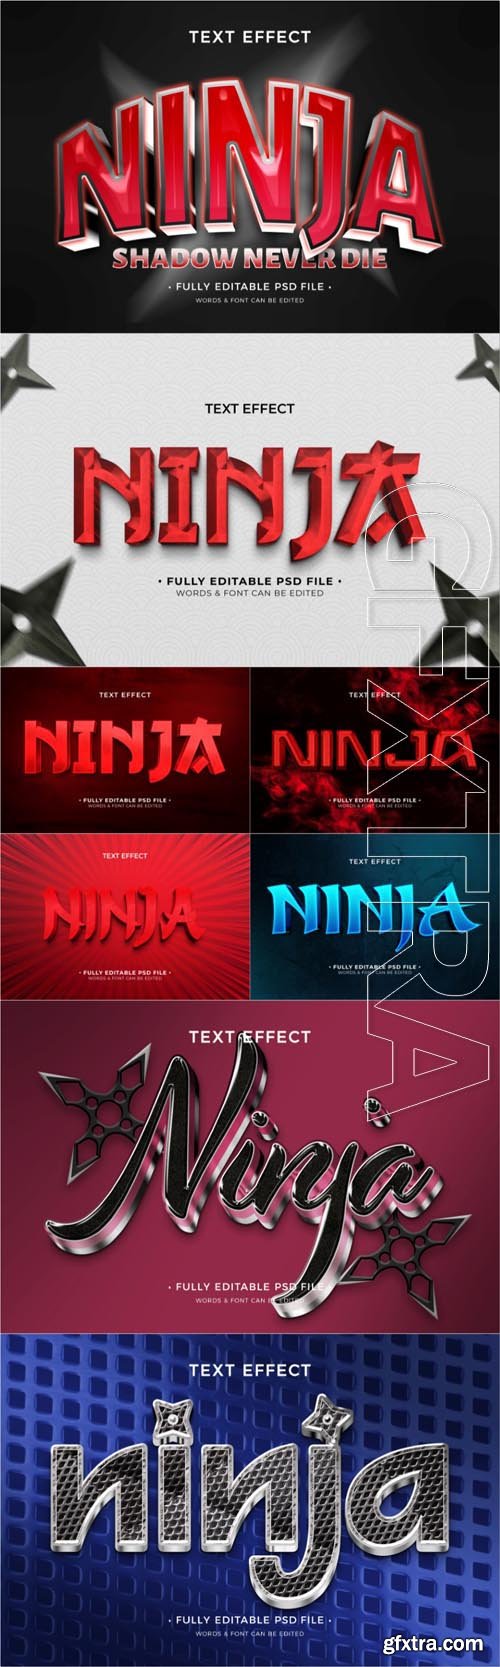 PSD ninja text effect